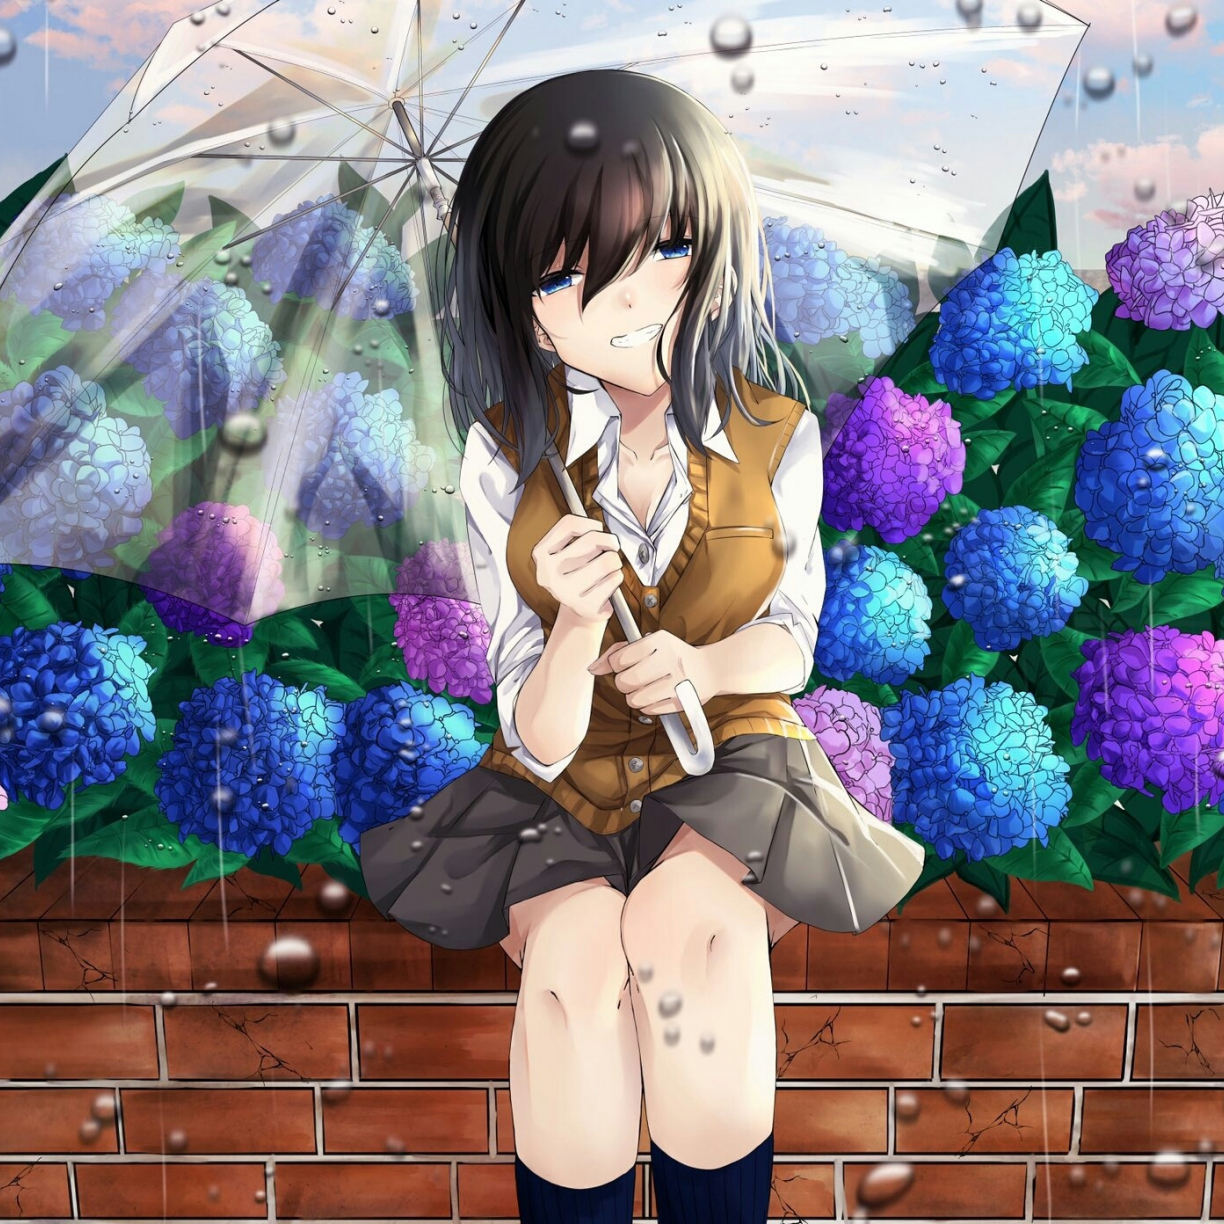 Girl & Rain Anime Aesthetic Wallpapers - Anime Wallpapers iPhone